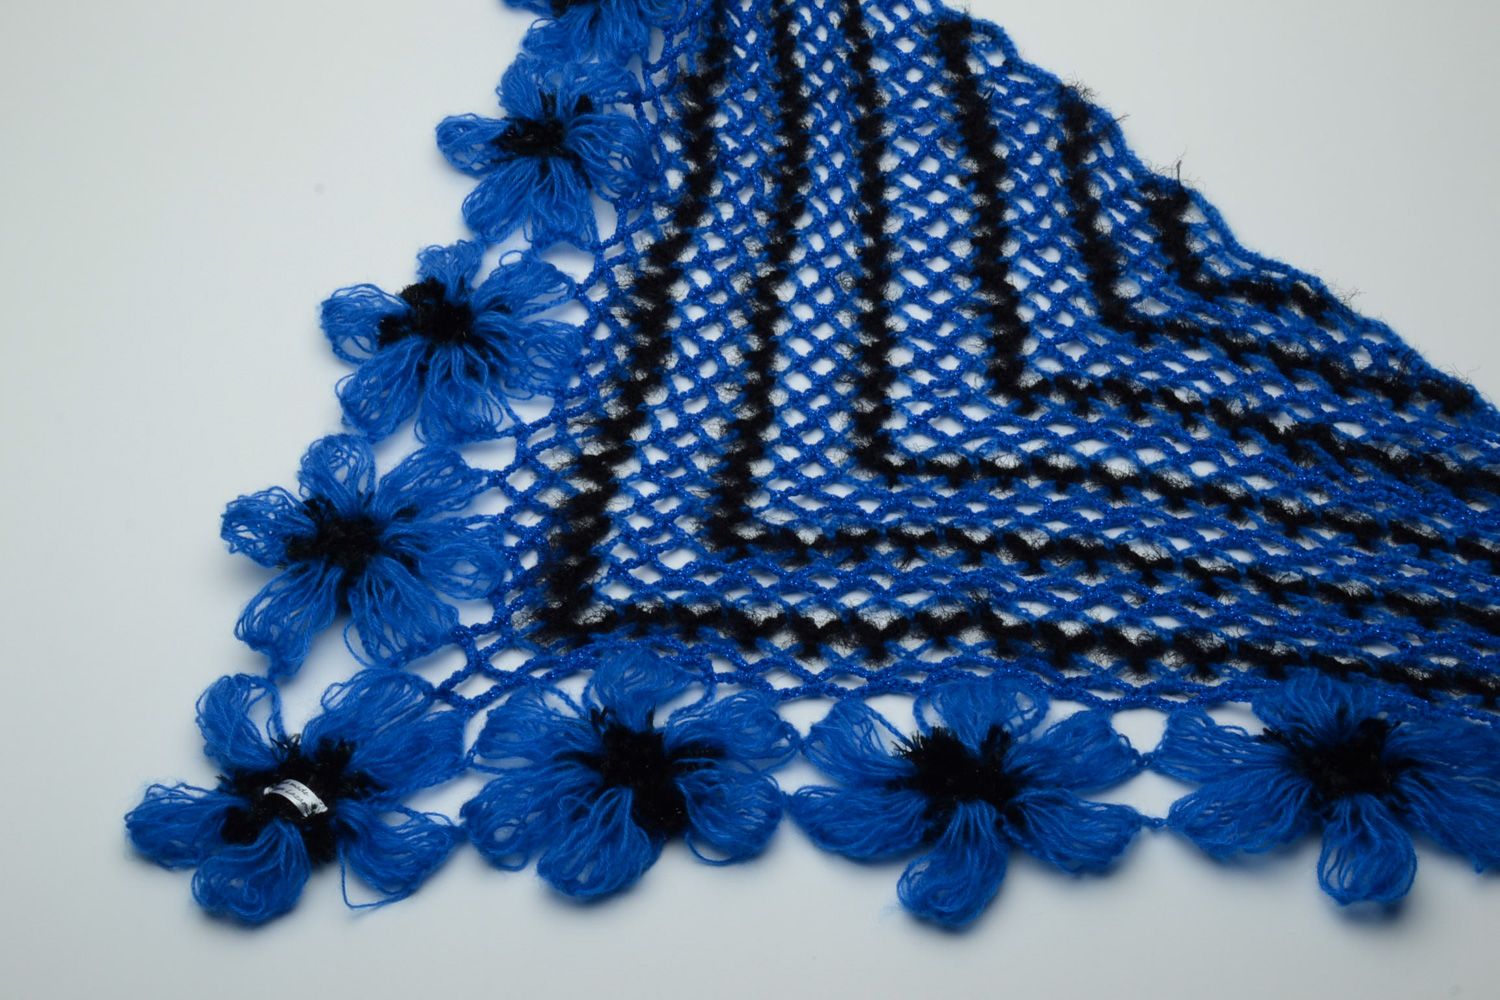 Black and blue handmade crochet women's shawl photo 3